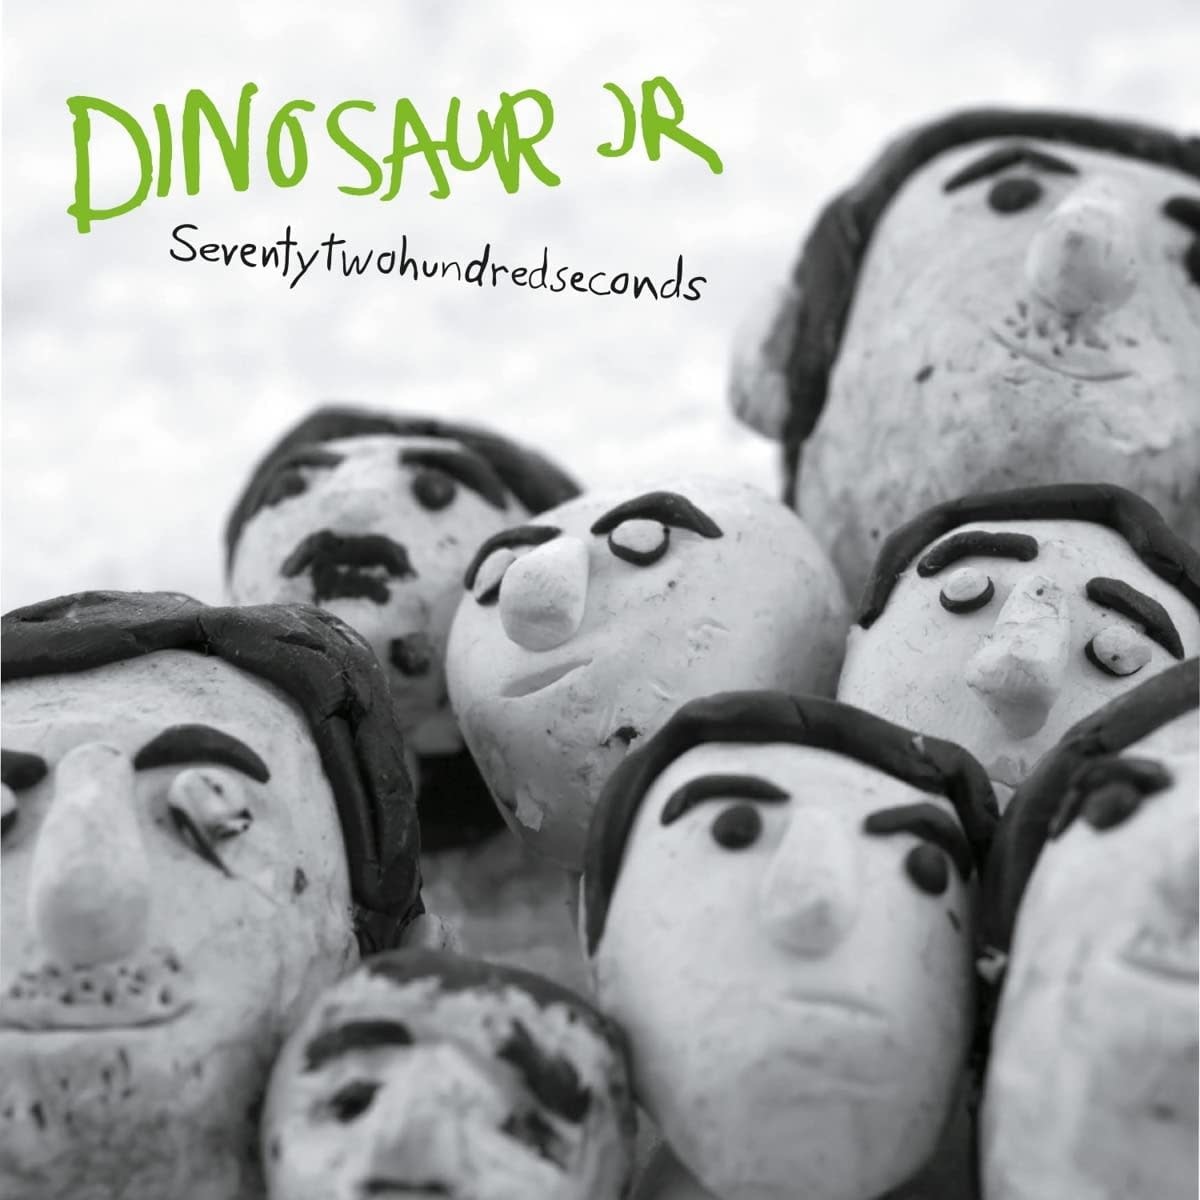 Dinosaur Jr – Seventytwohundredseconds: MTV Live